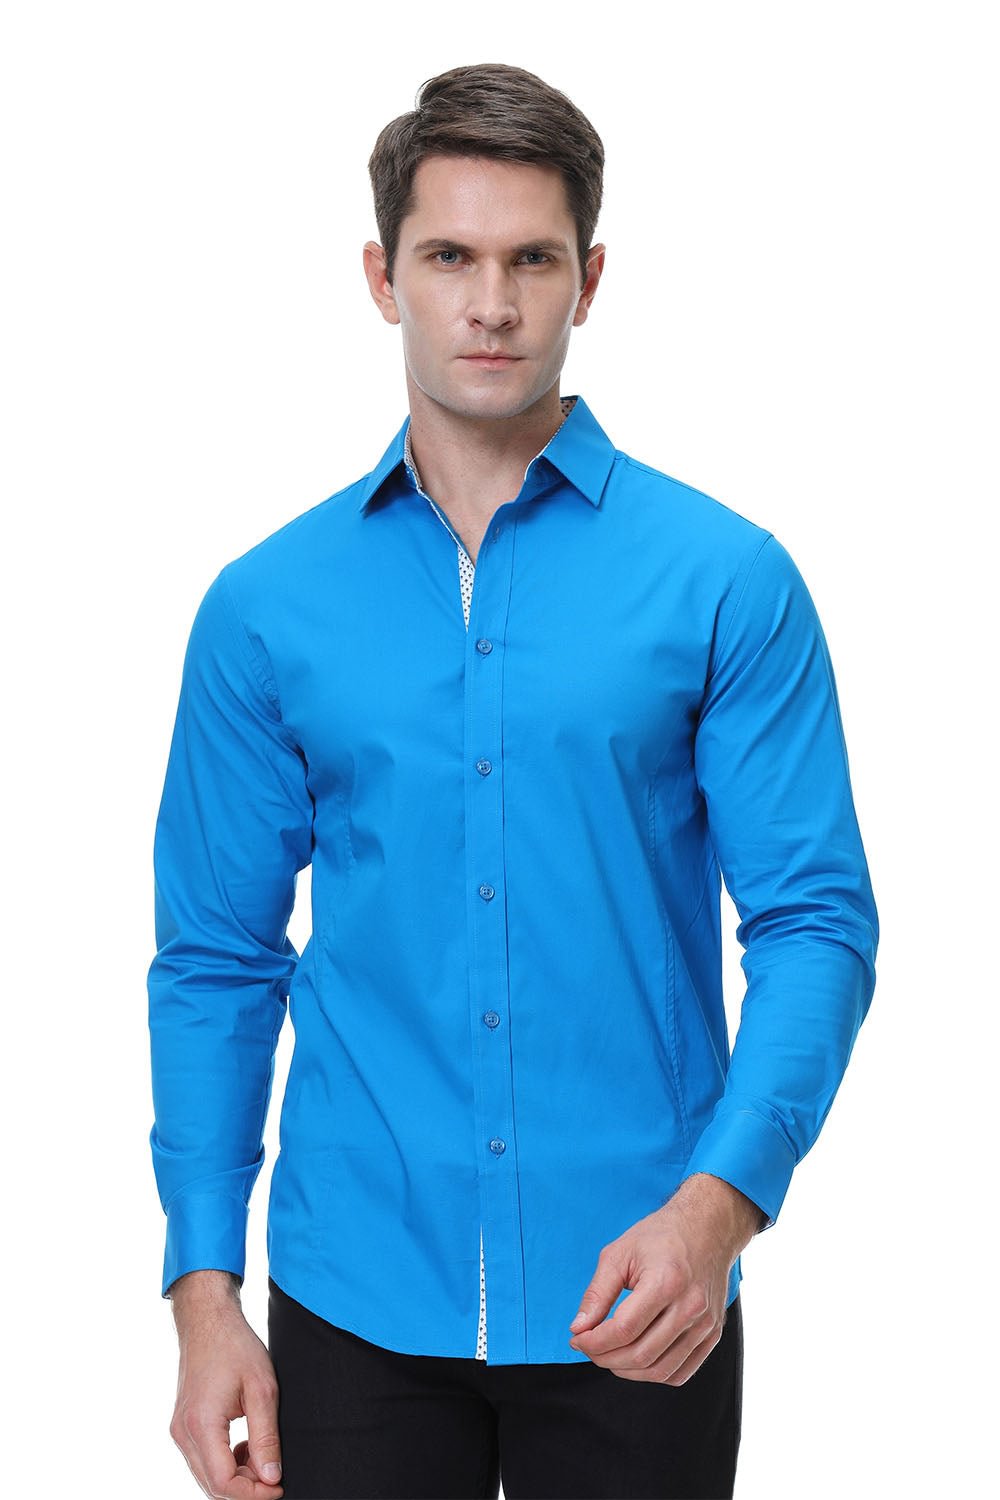 Men's Casual Long Cotton Stretch Shirt Turquoise Alex Vando Fashion